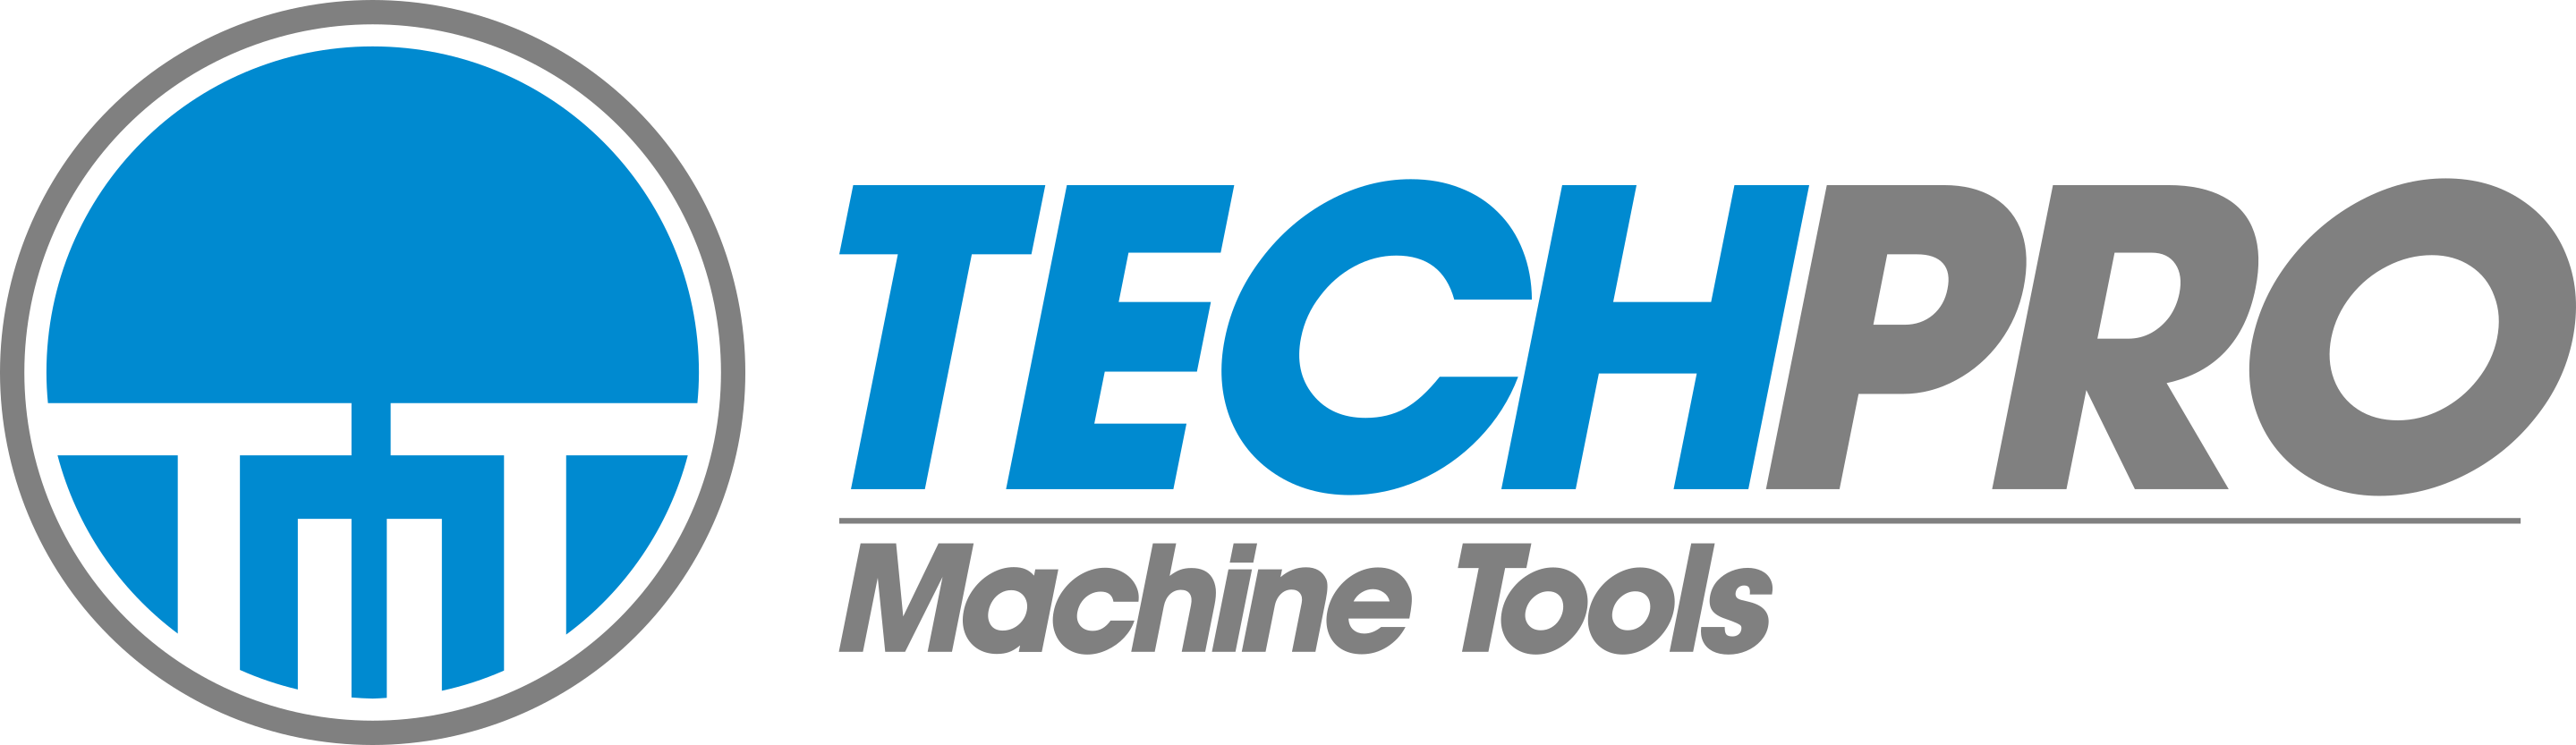 Techpro Machine Tools Pte Ltd